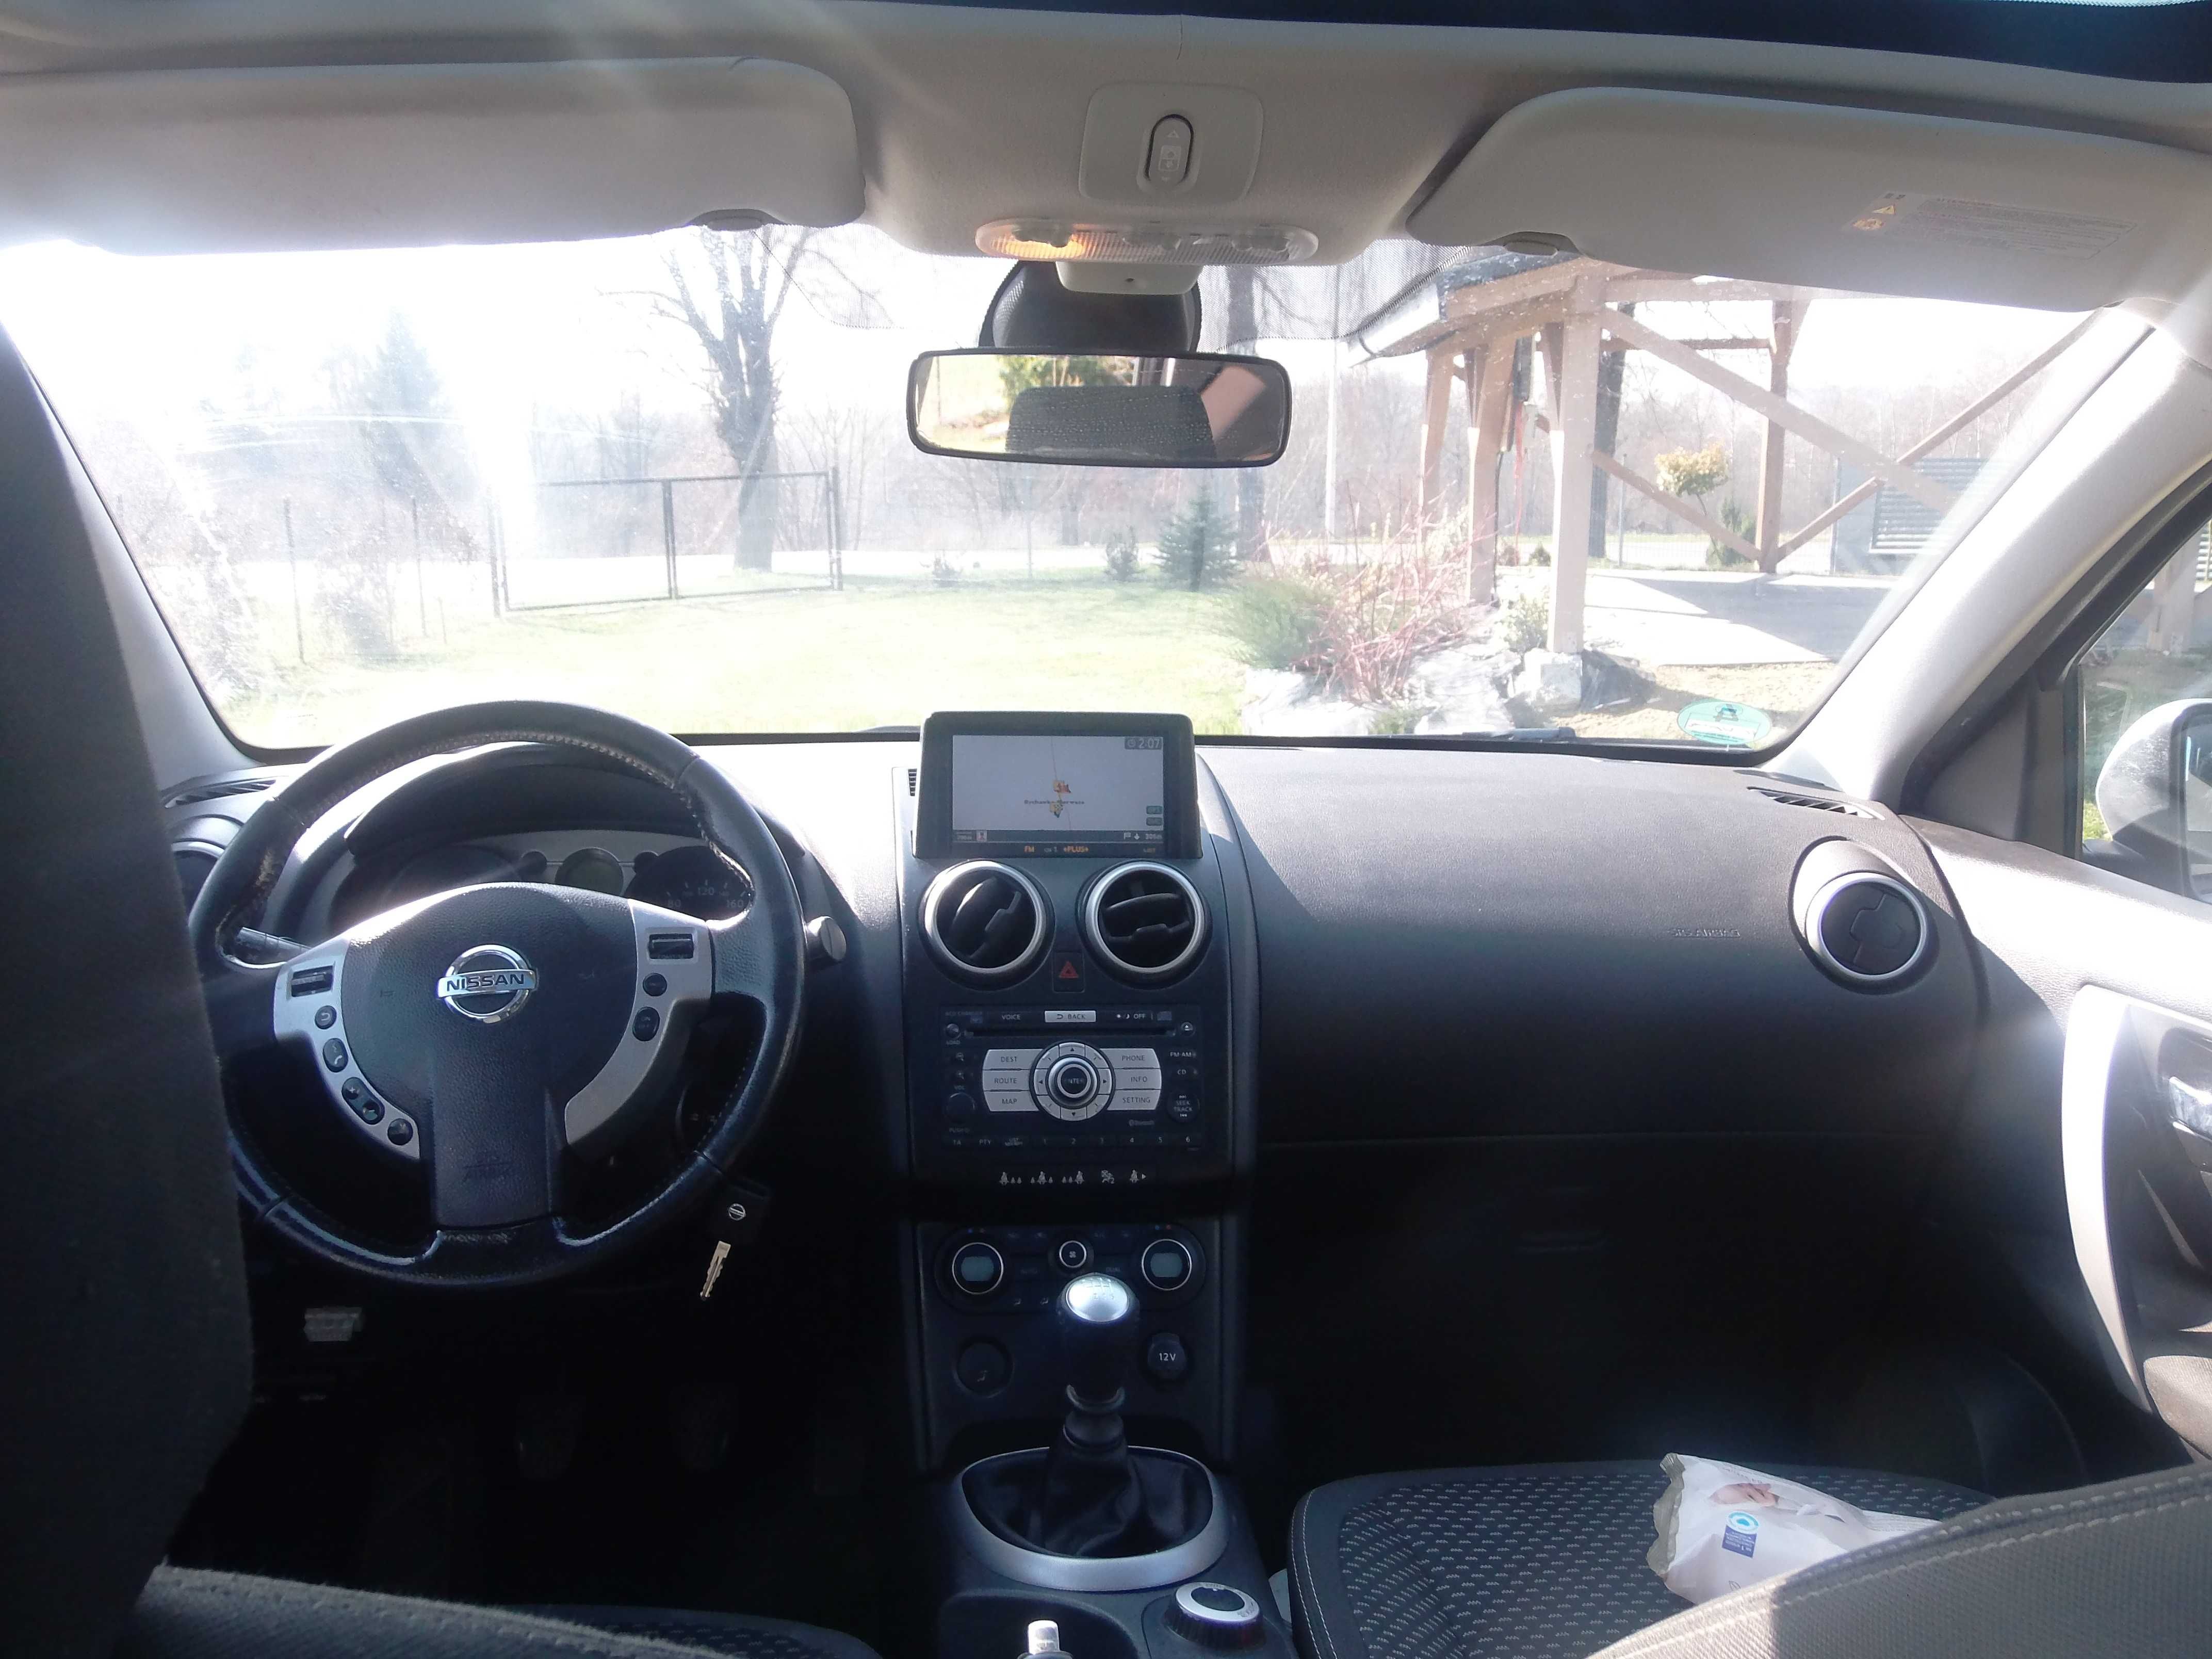 Nissan Qashqai 2.0 DCI Bogata wersja 4x4, panorama,kamera,nawigacja